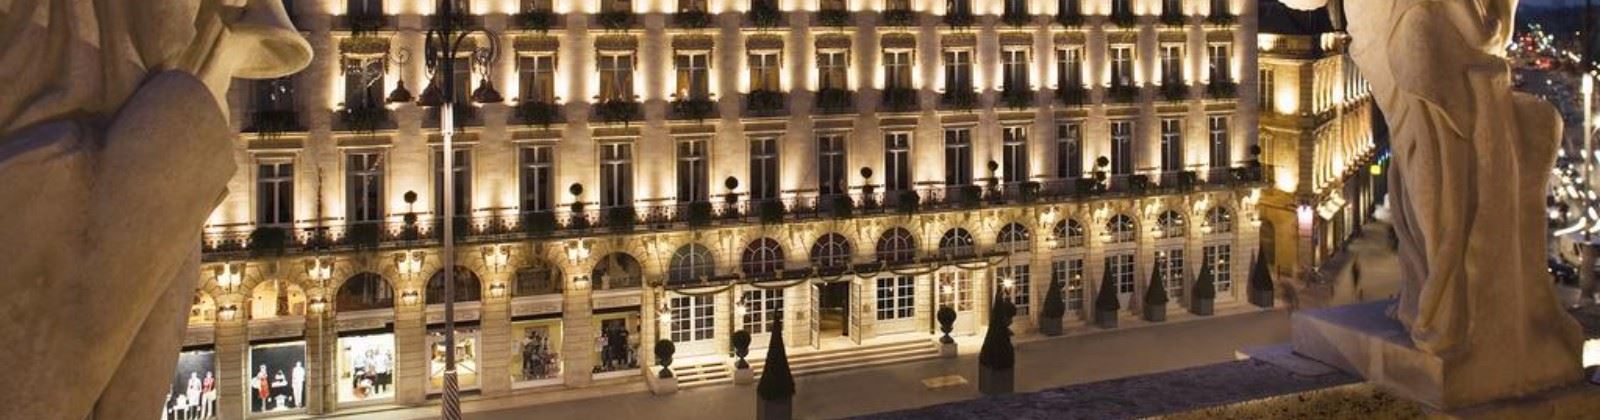 OLEVENE image - grand-hotel-de-bordeaux-olevene-restaurant-convention-seminaires-reunions-